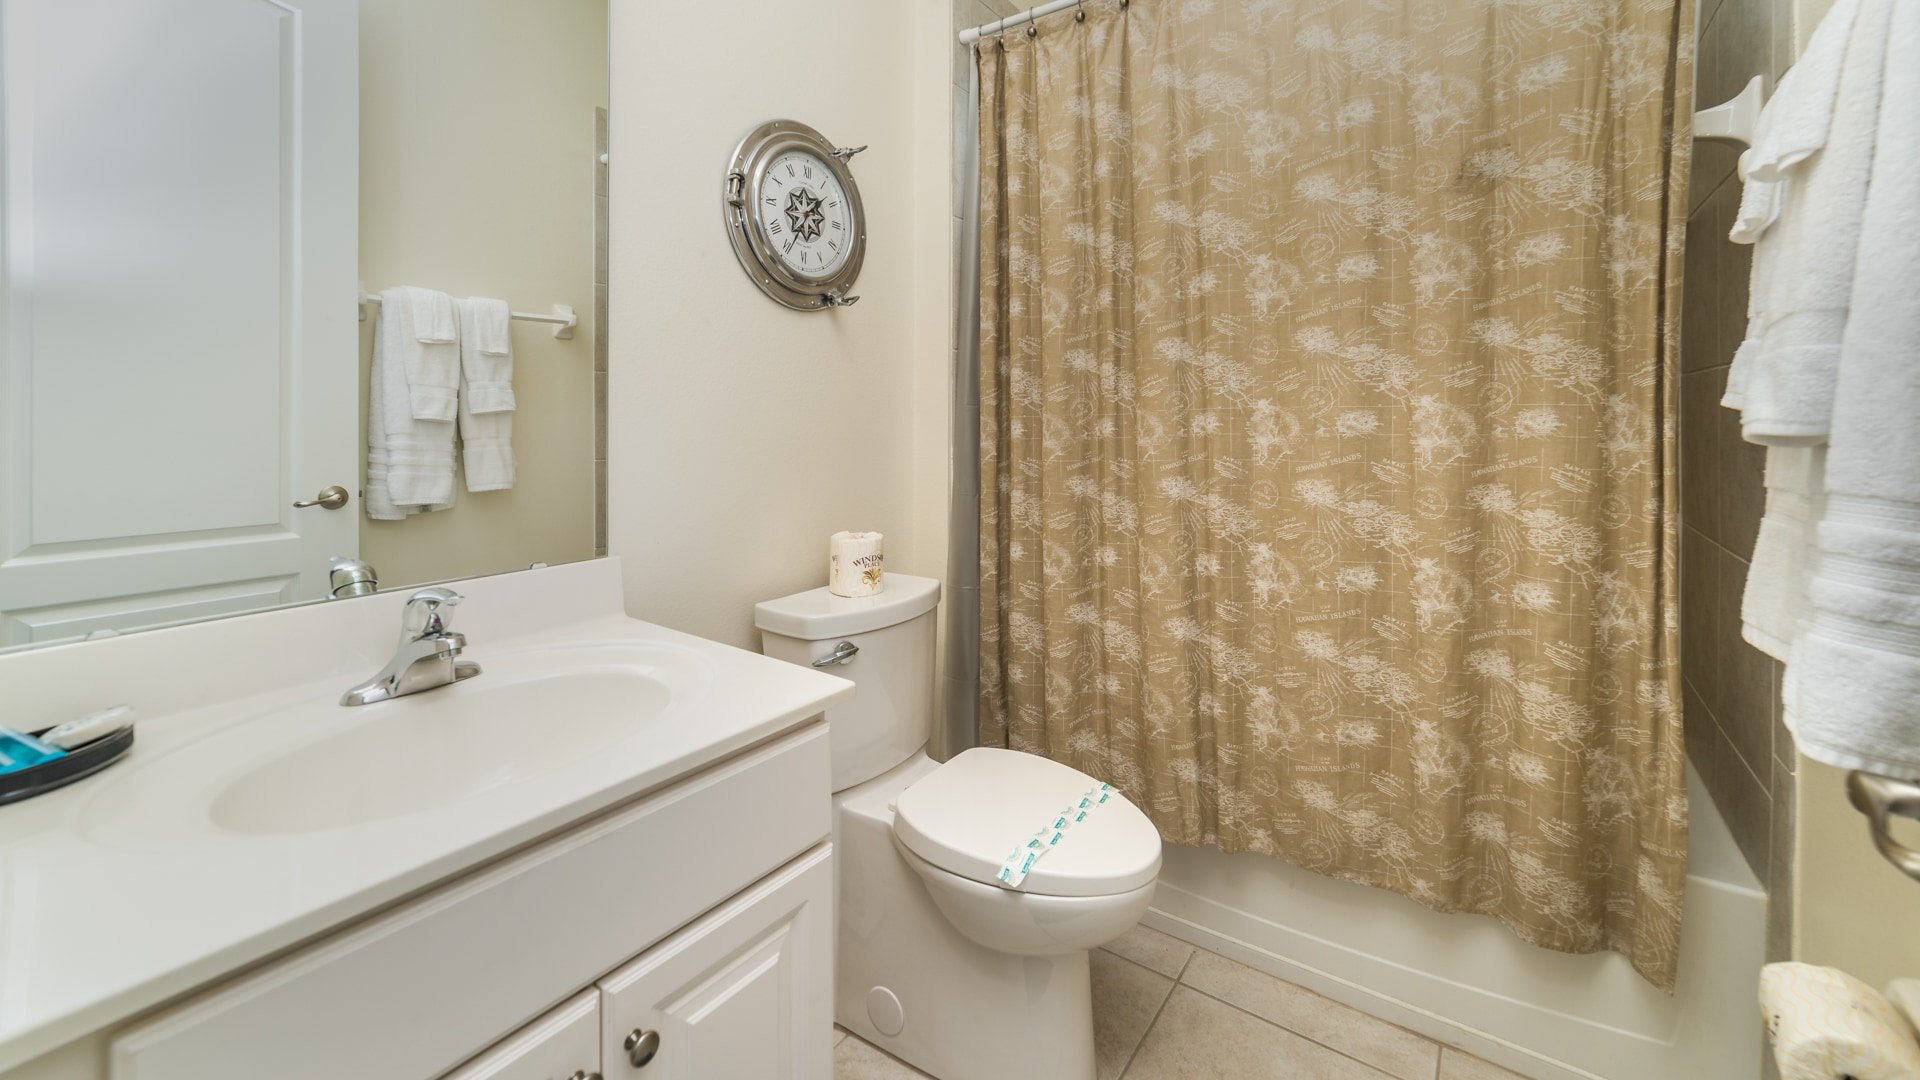 King Suite Bathroom 3 
(Tub/Shower Combo)